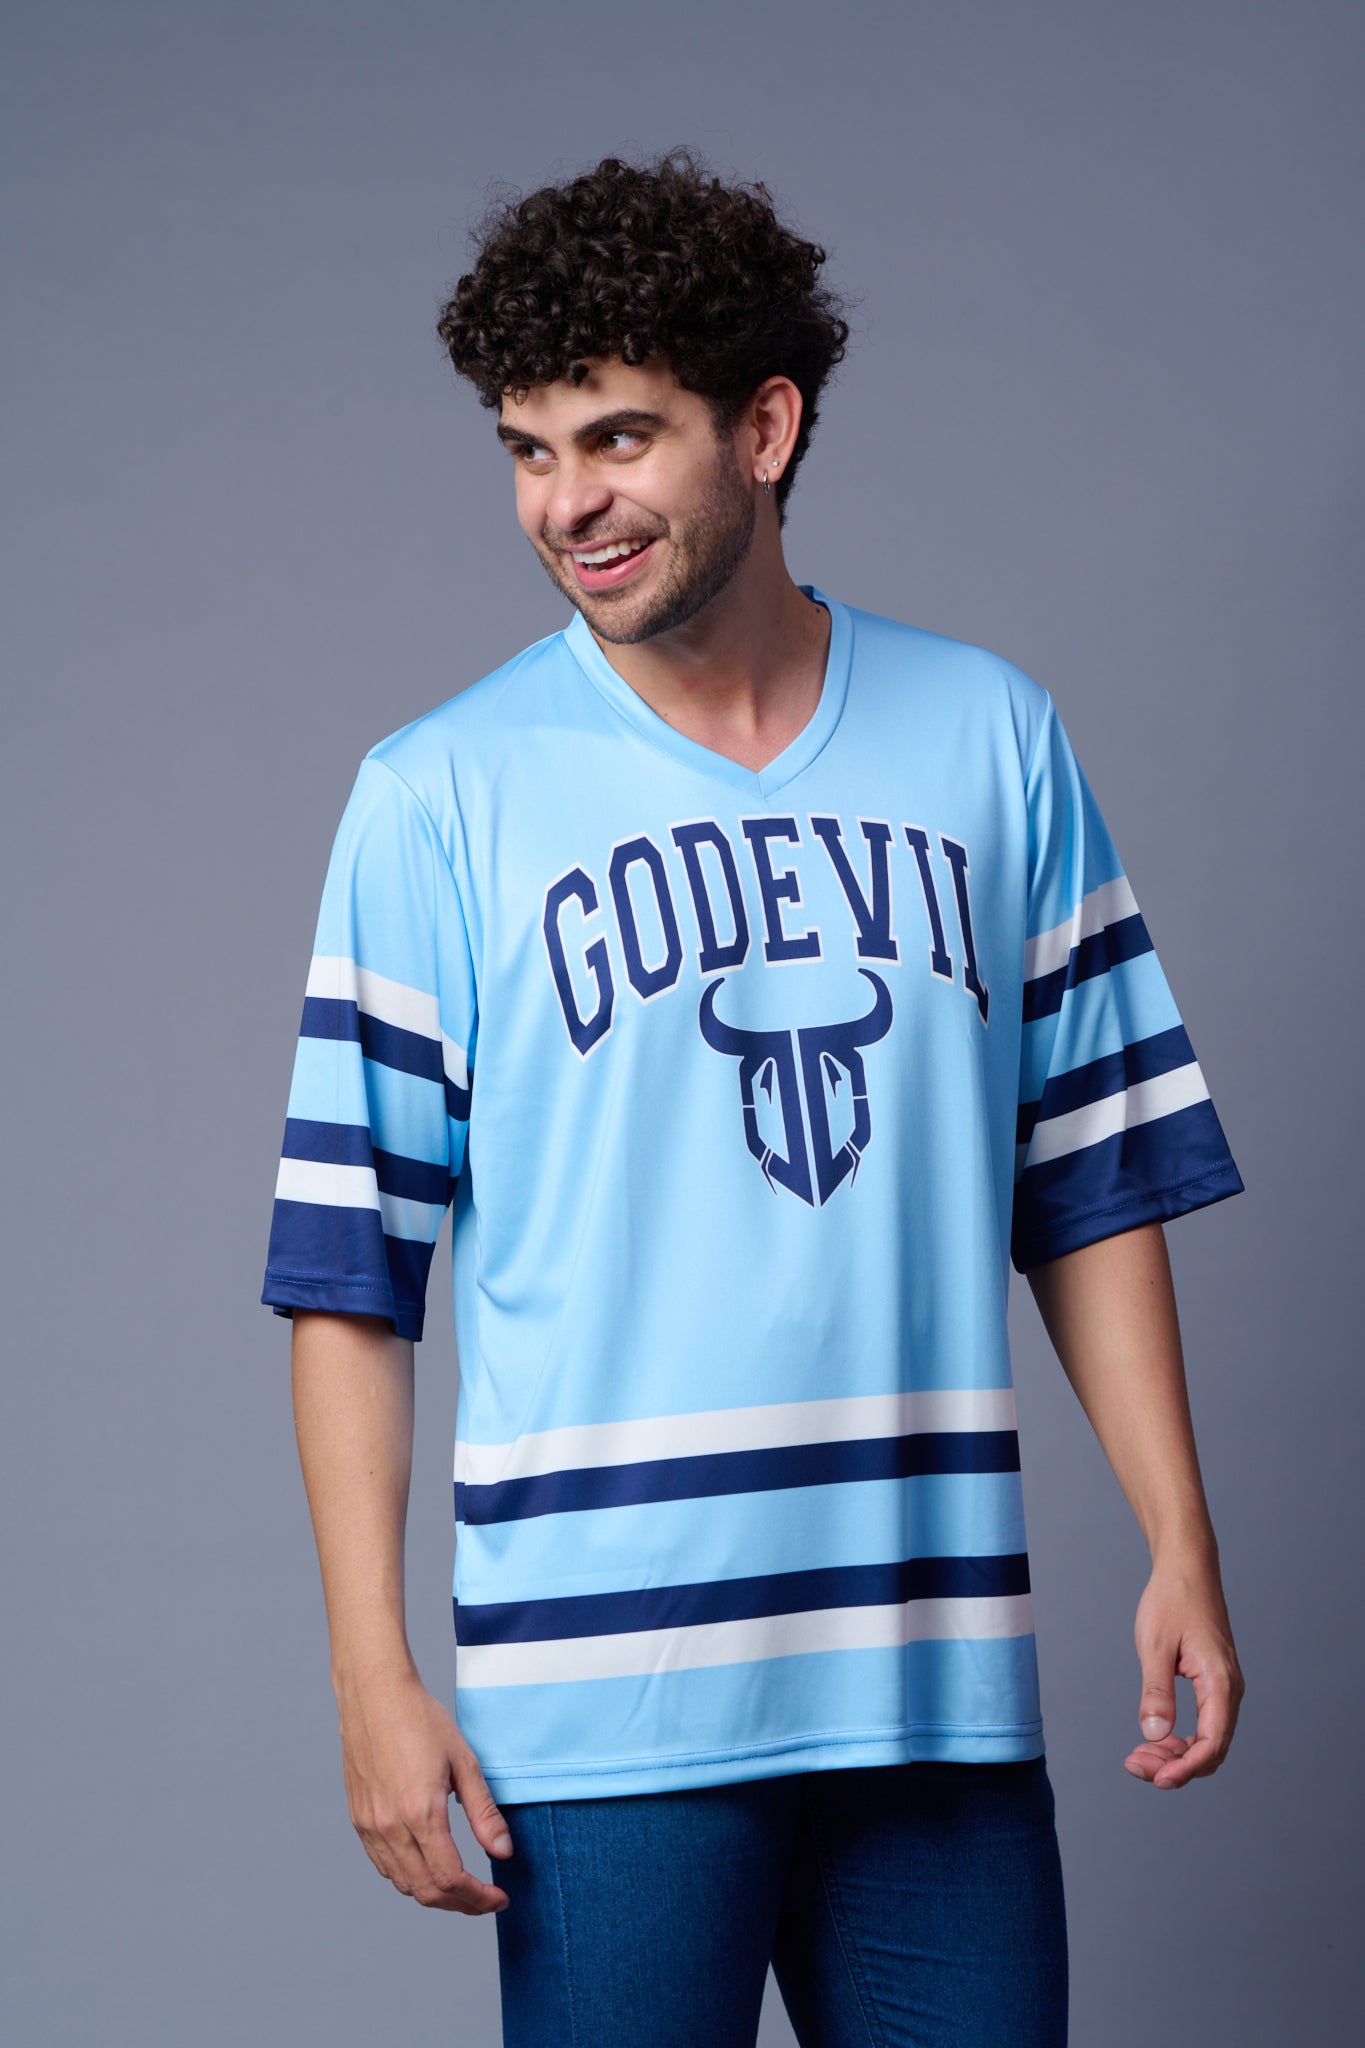 Go Devil Printed Light Blue Striped Oversized Jersey T-Shirt for Men